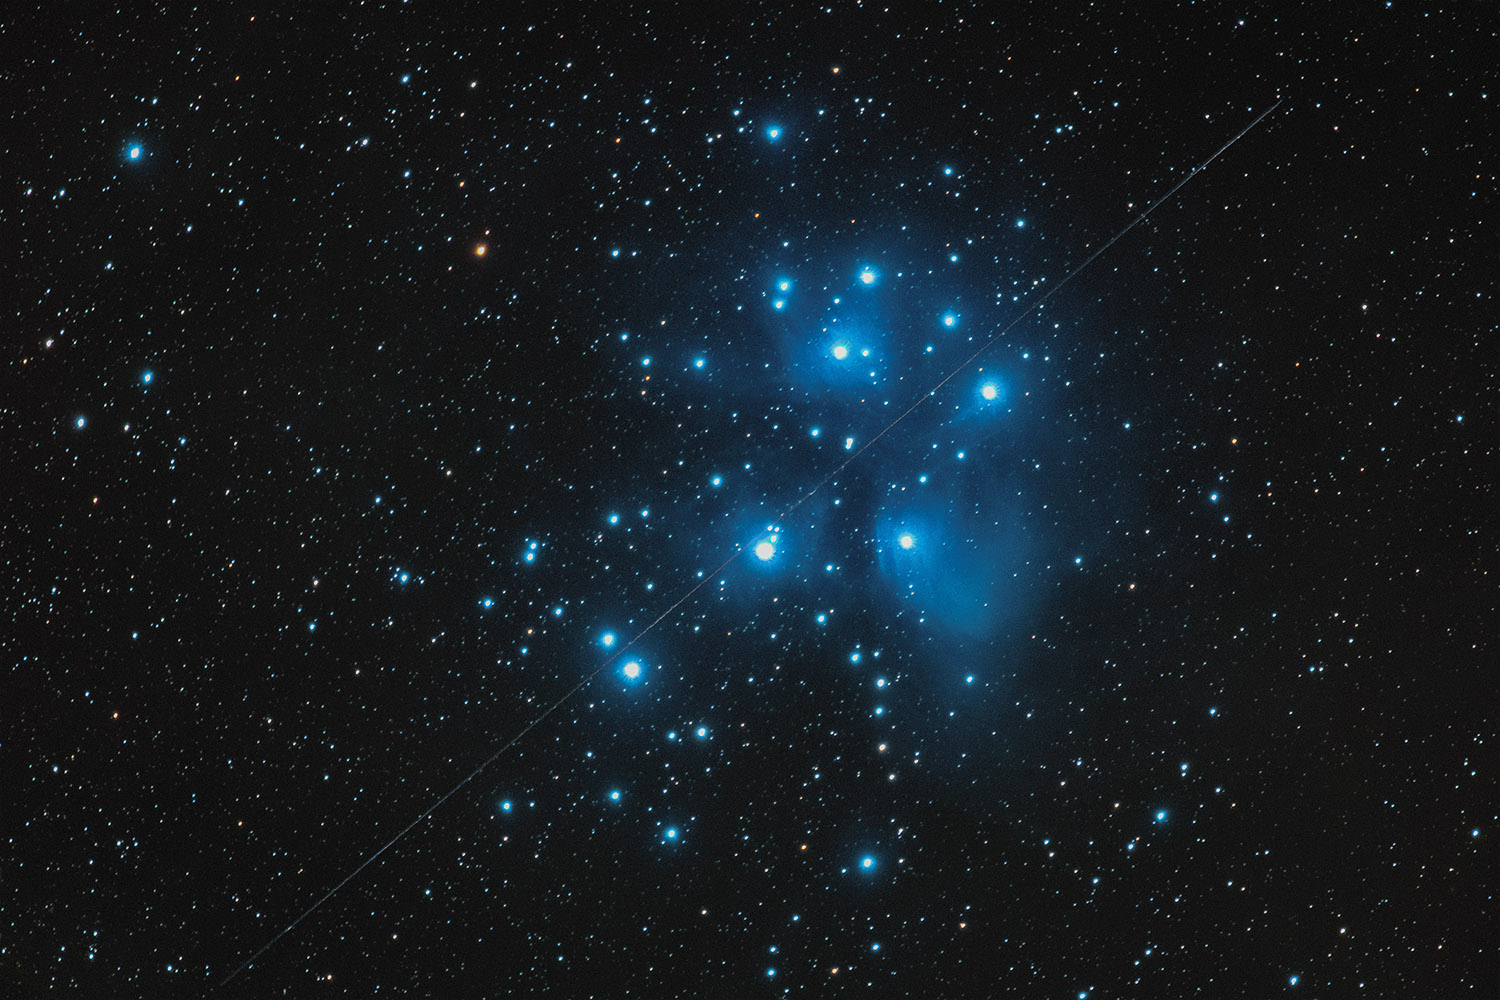 Pleiades and Geminid meteor shower Sky & Telescope Sky & Telescope